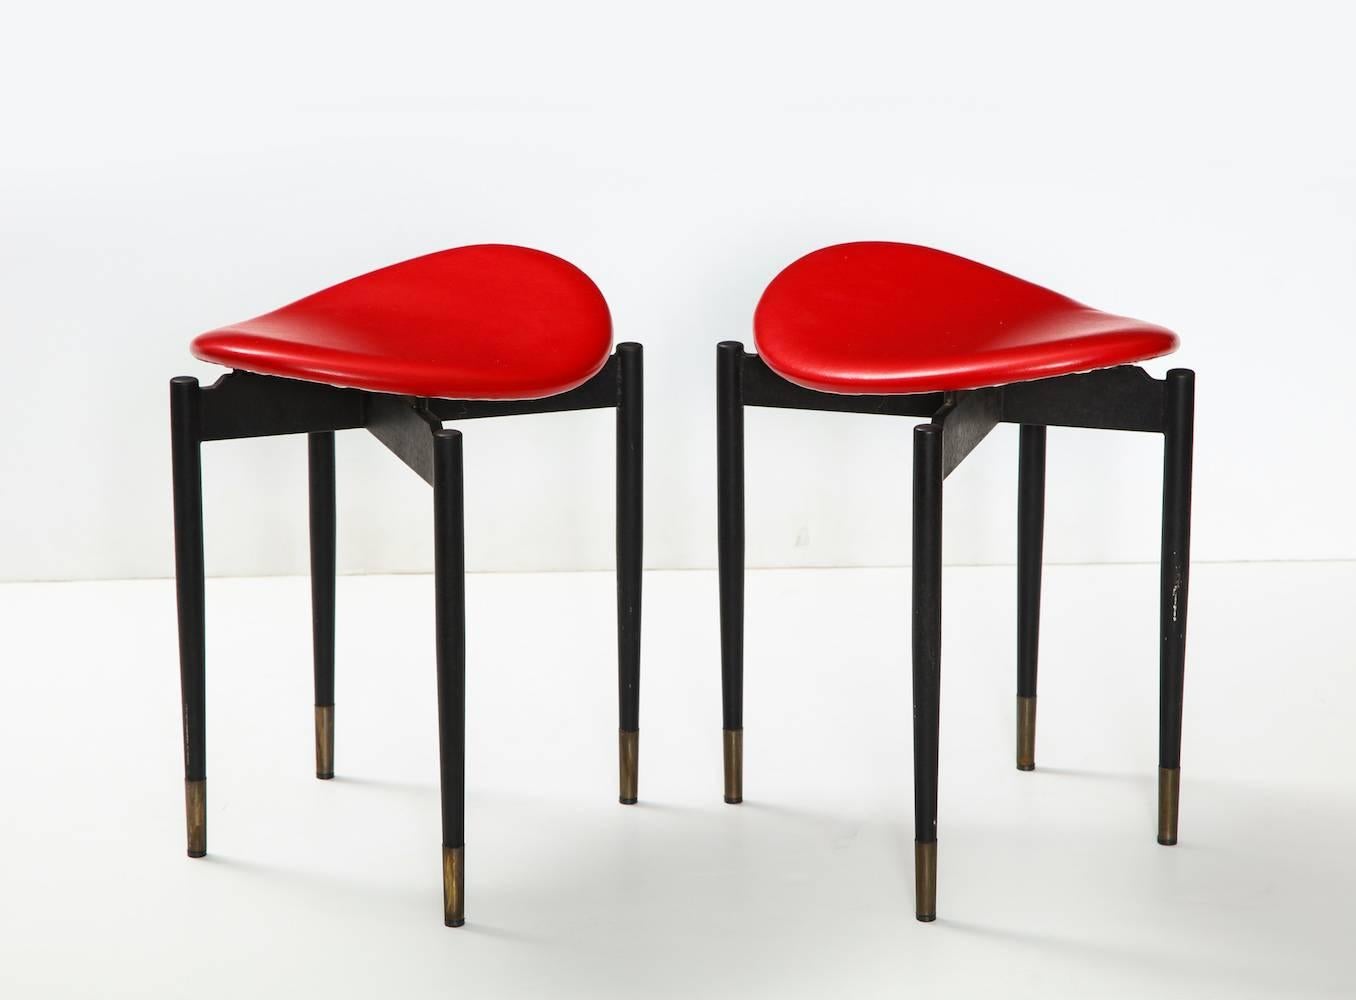 Rare pair of stools by Carlo Mollino.
Enameled steel legs with brass tips and red vinyl seats. From Mollino's commission at Lutrario Hall, Turin. 
Literature: Carlo Mollino: Interni in Piano-Sequenza, De Giorgi, ppg. 146-147 Carlo Mollino,